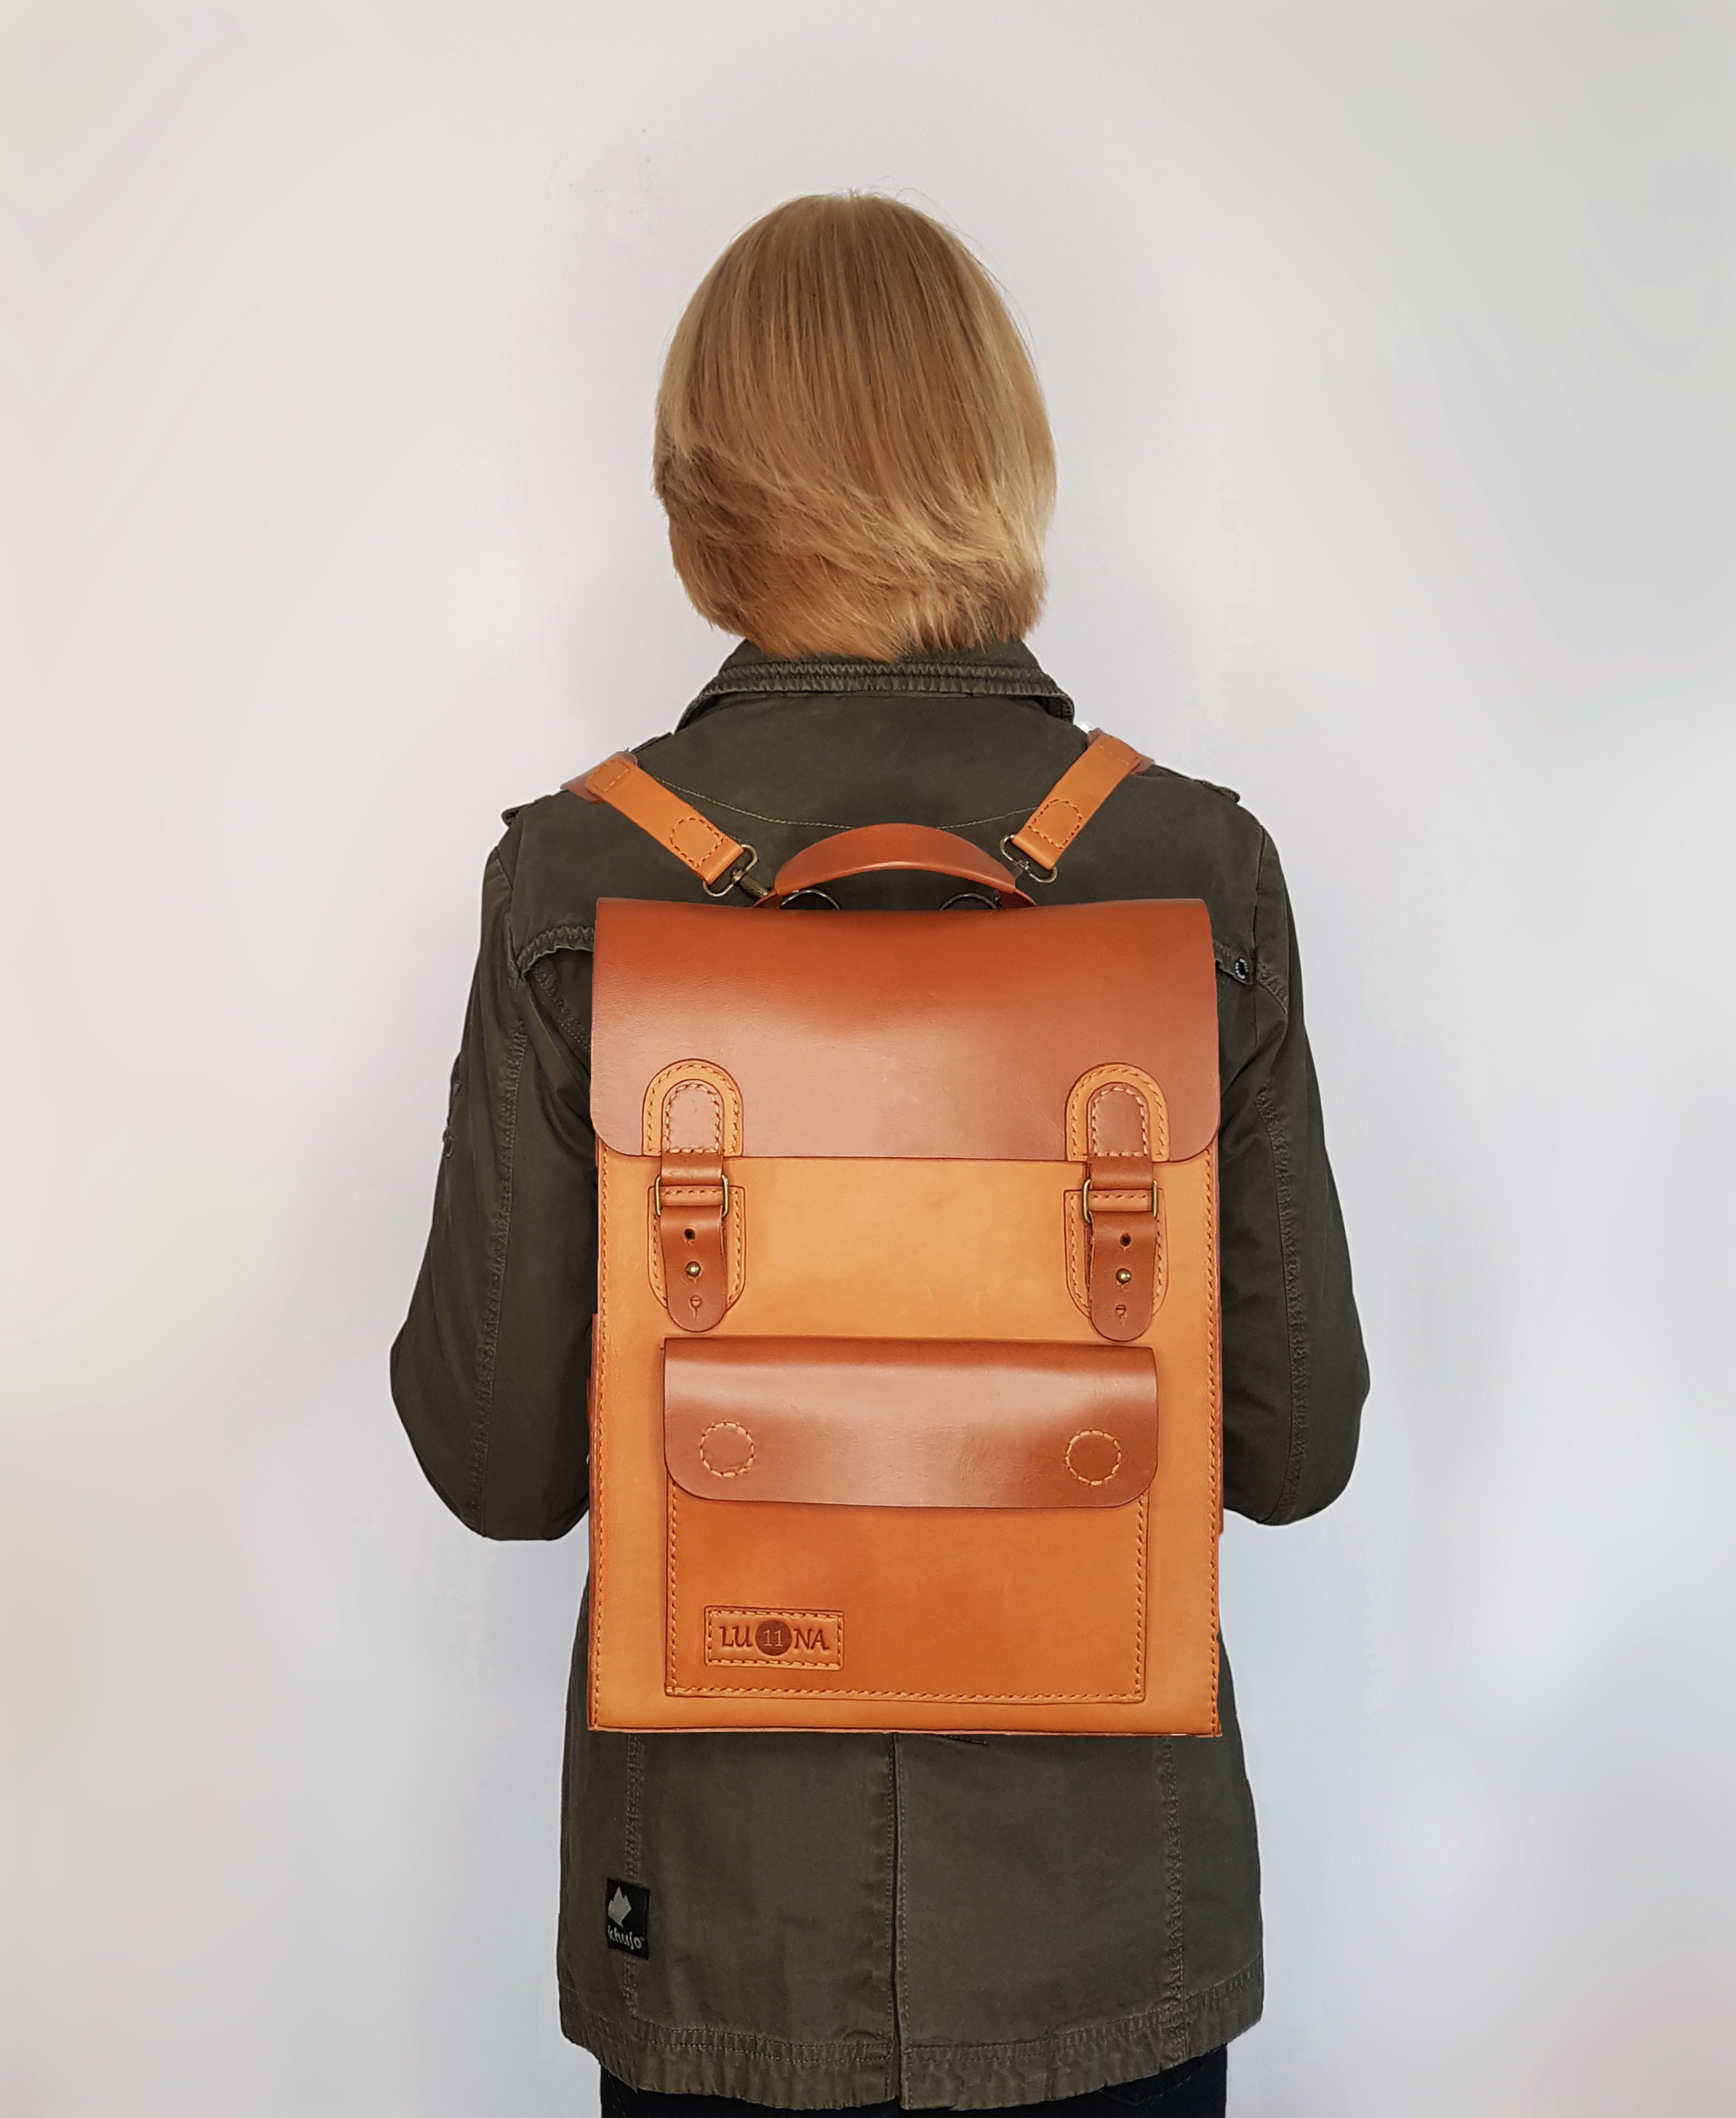 Prelude Onbeleefd Brutaal Convertible Backpack Leather Backpack Leather Satchel Backpack - Etsy